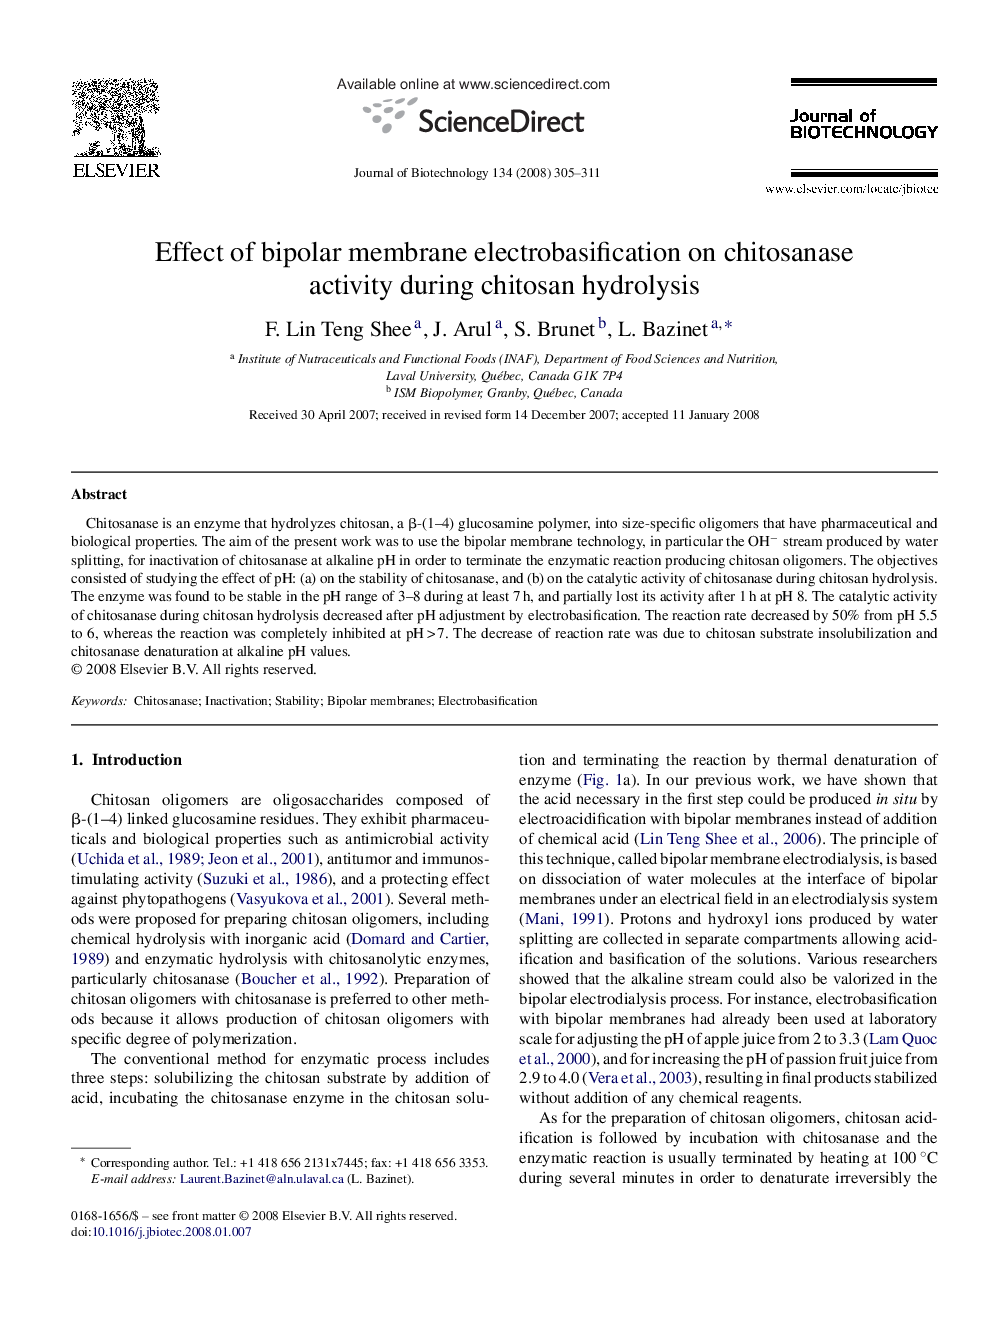 Effect of bipolar membrane electrobasification on chitosanase activity during chitosan hydrolysis